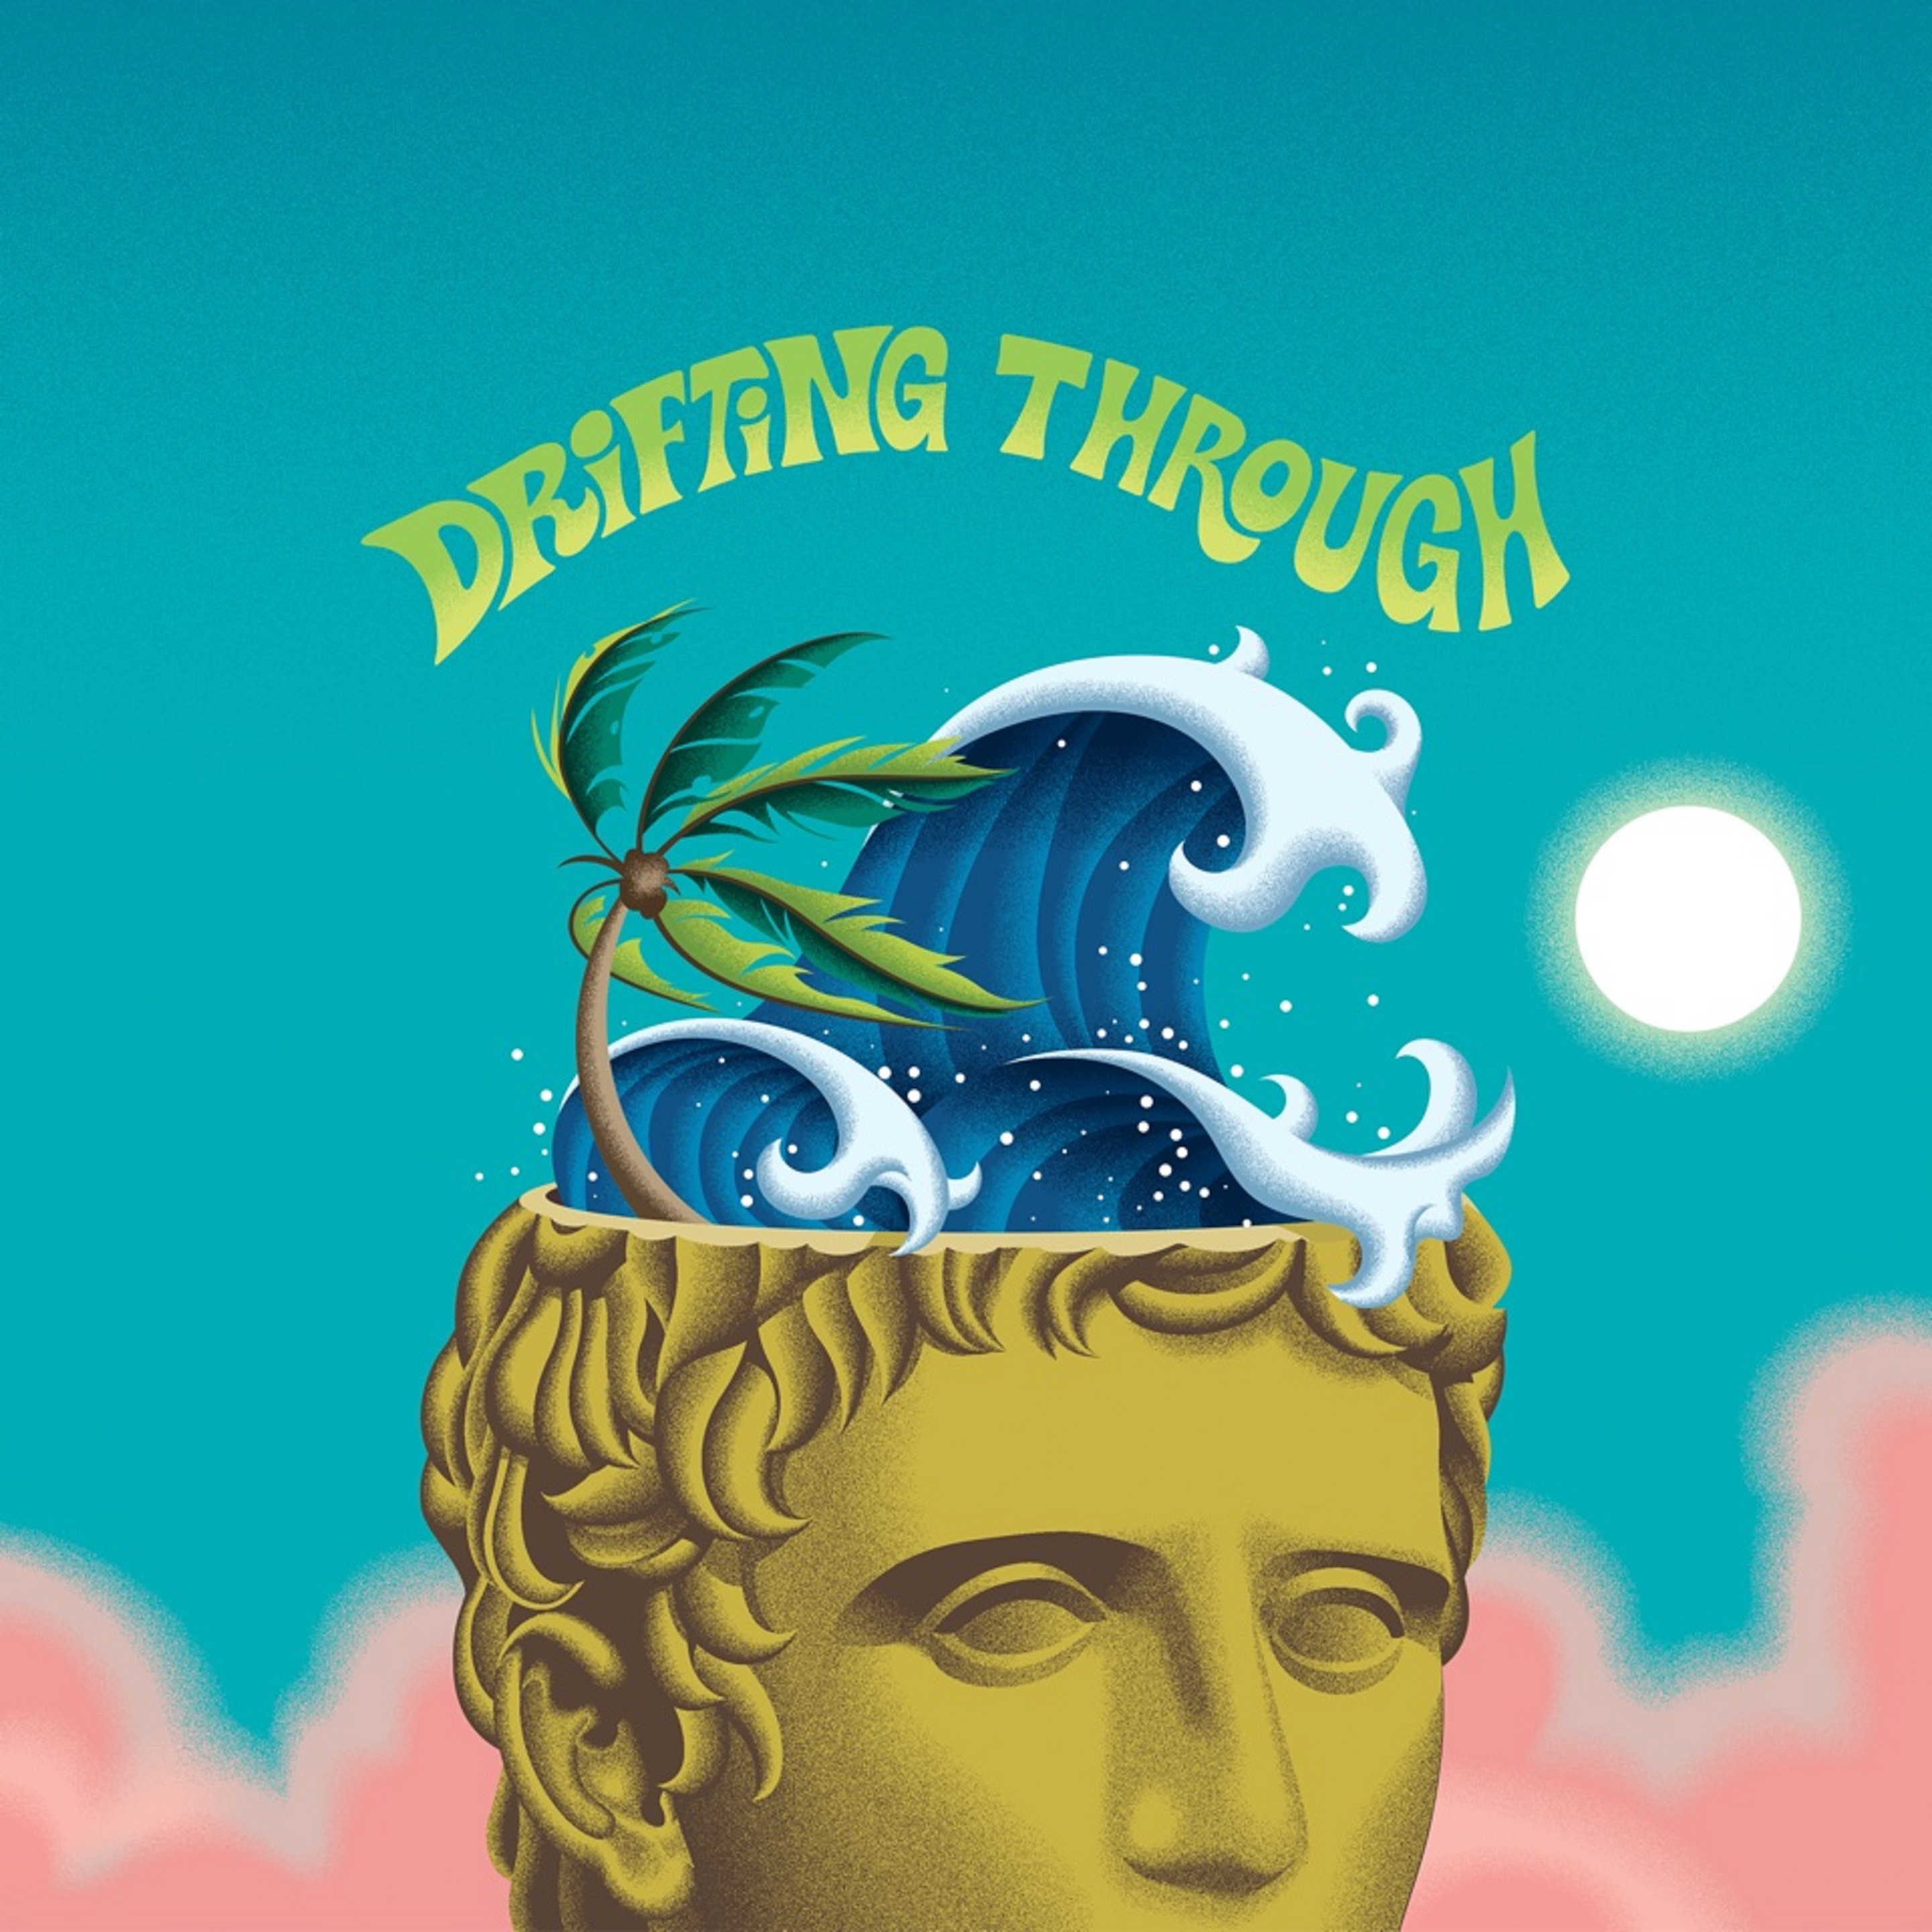 Adam Weinberg Releases New Single "Drifting Through"